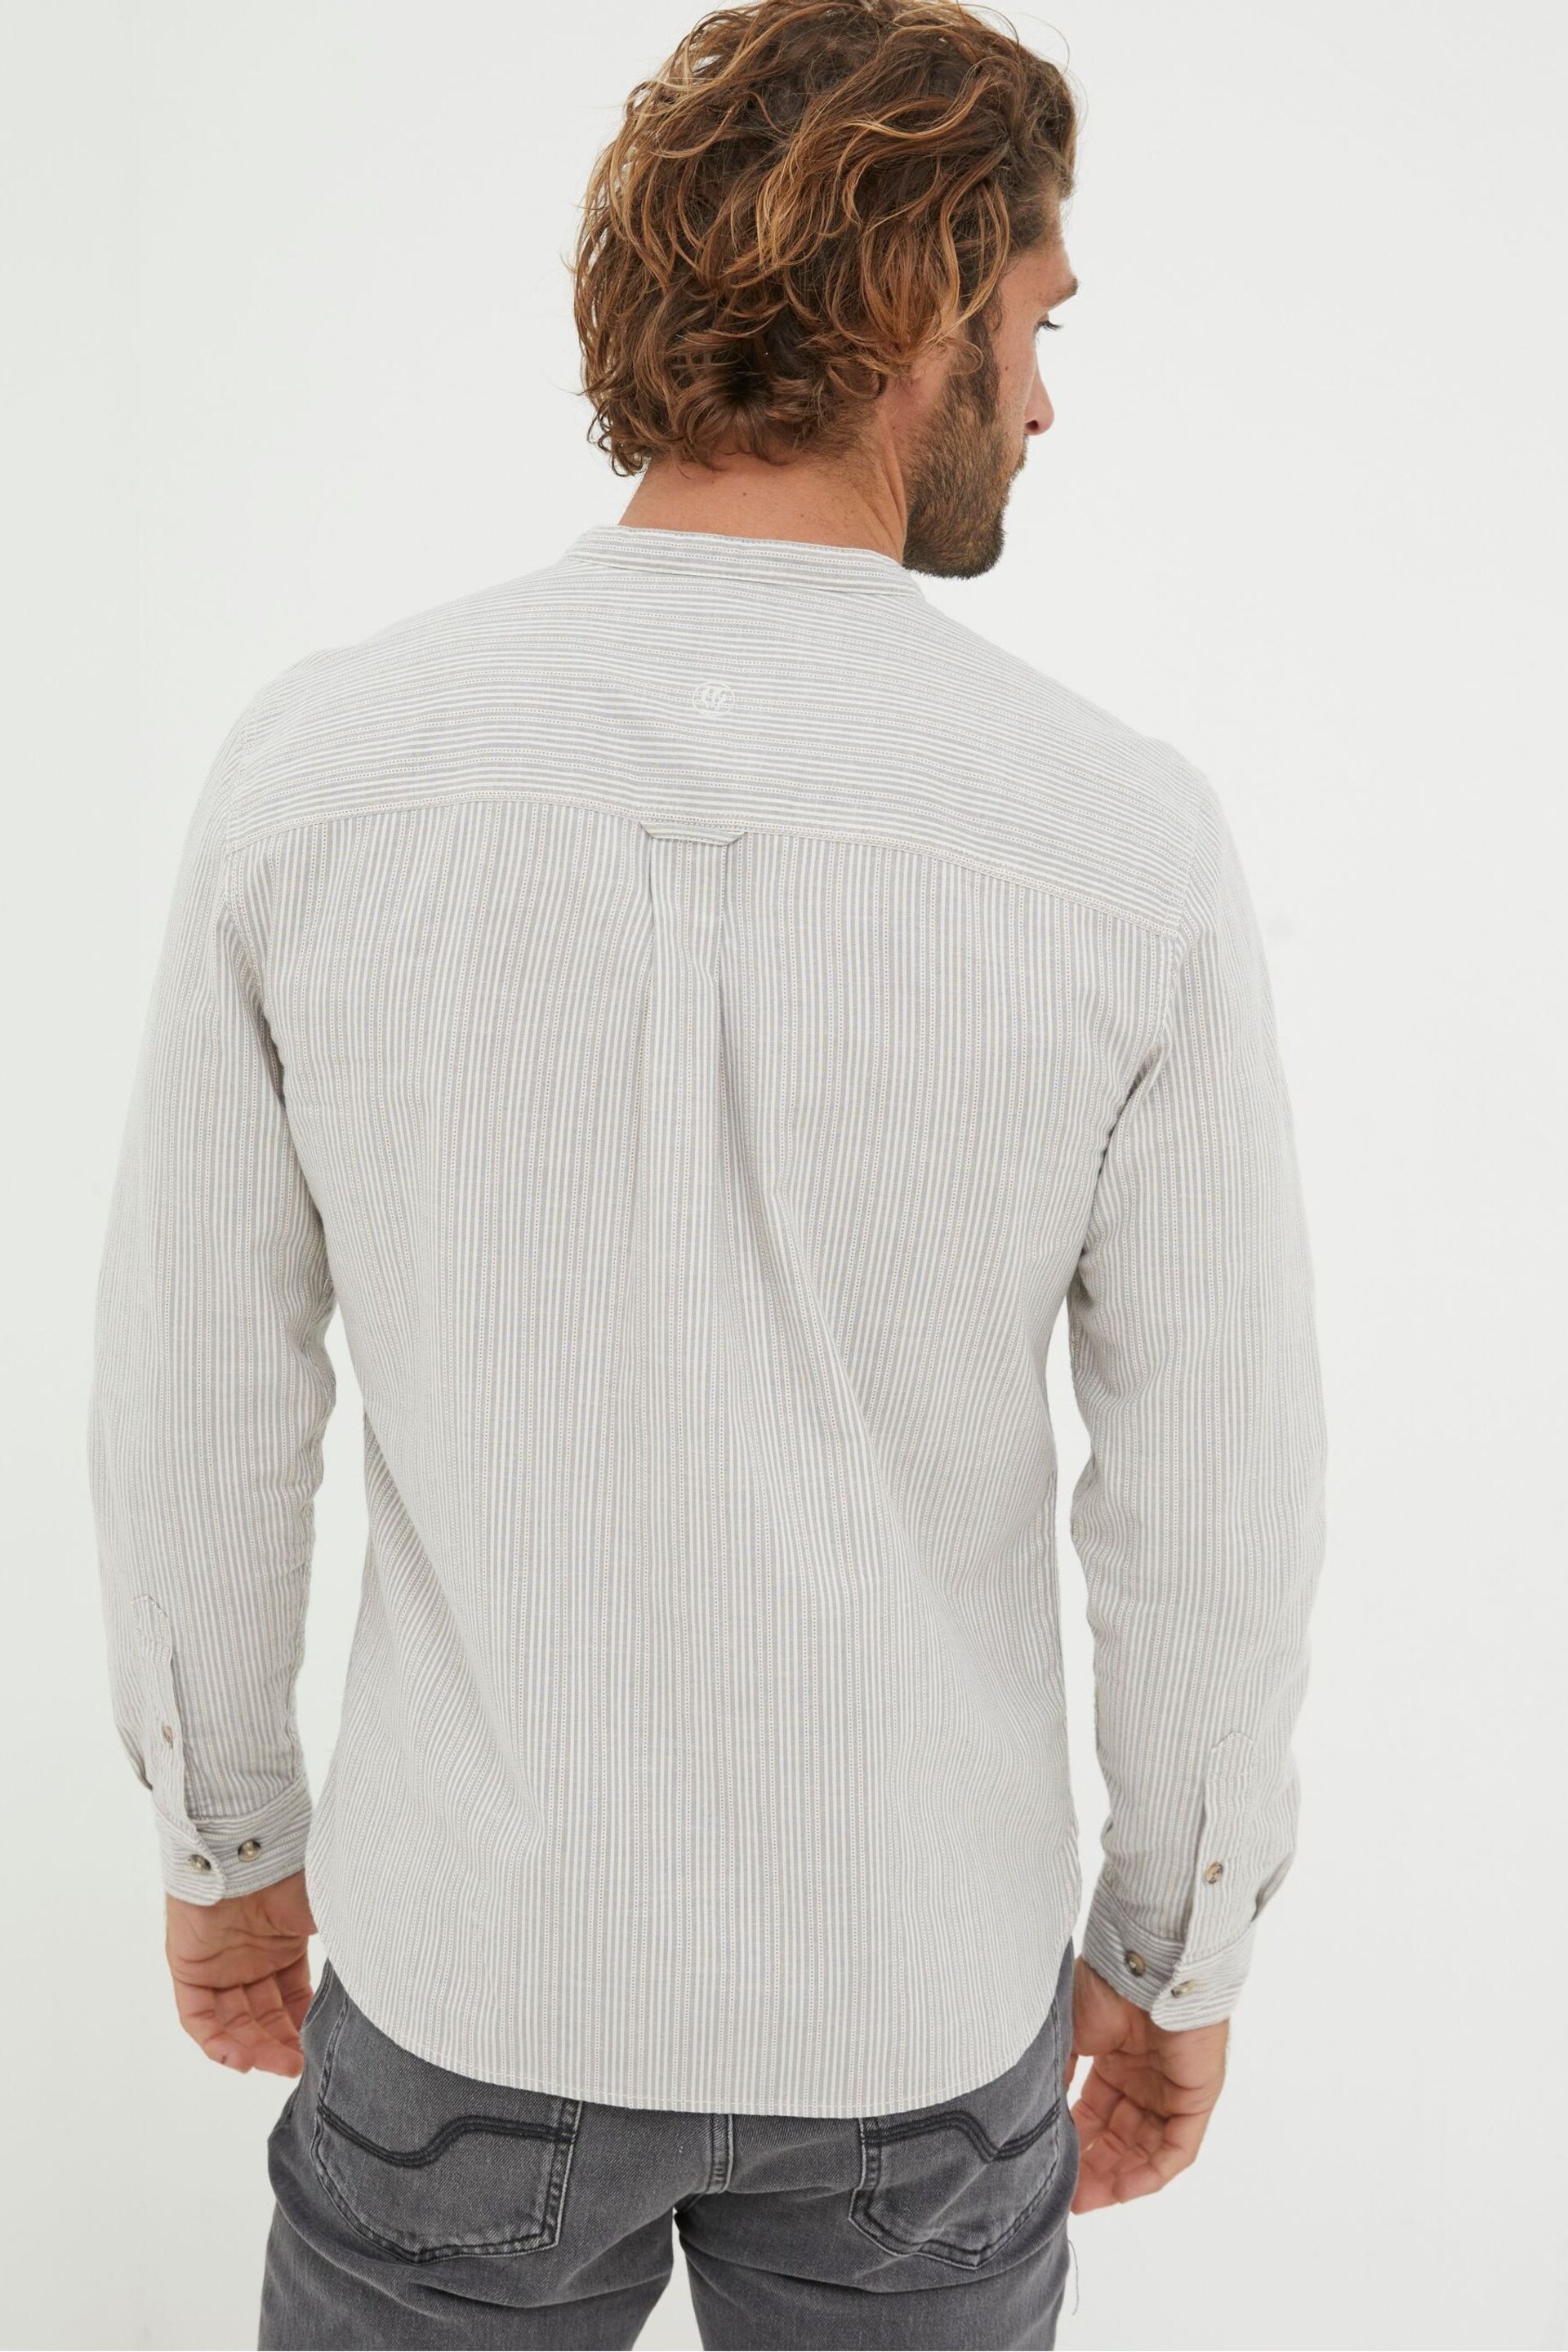 FatFace Natural Stripe Grandad Shirt - Image 2 of 5